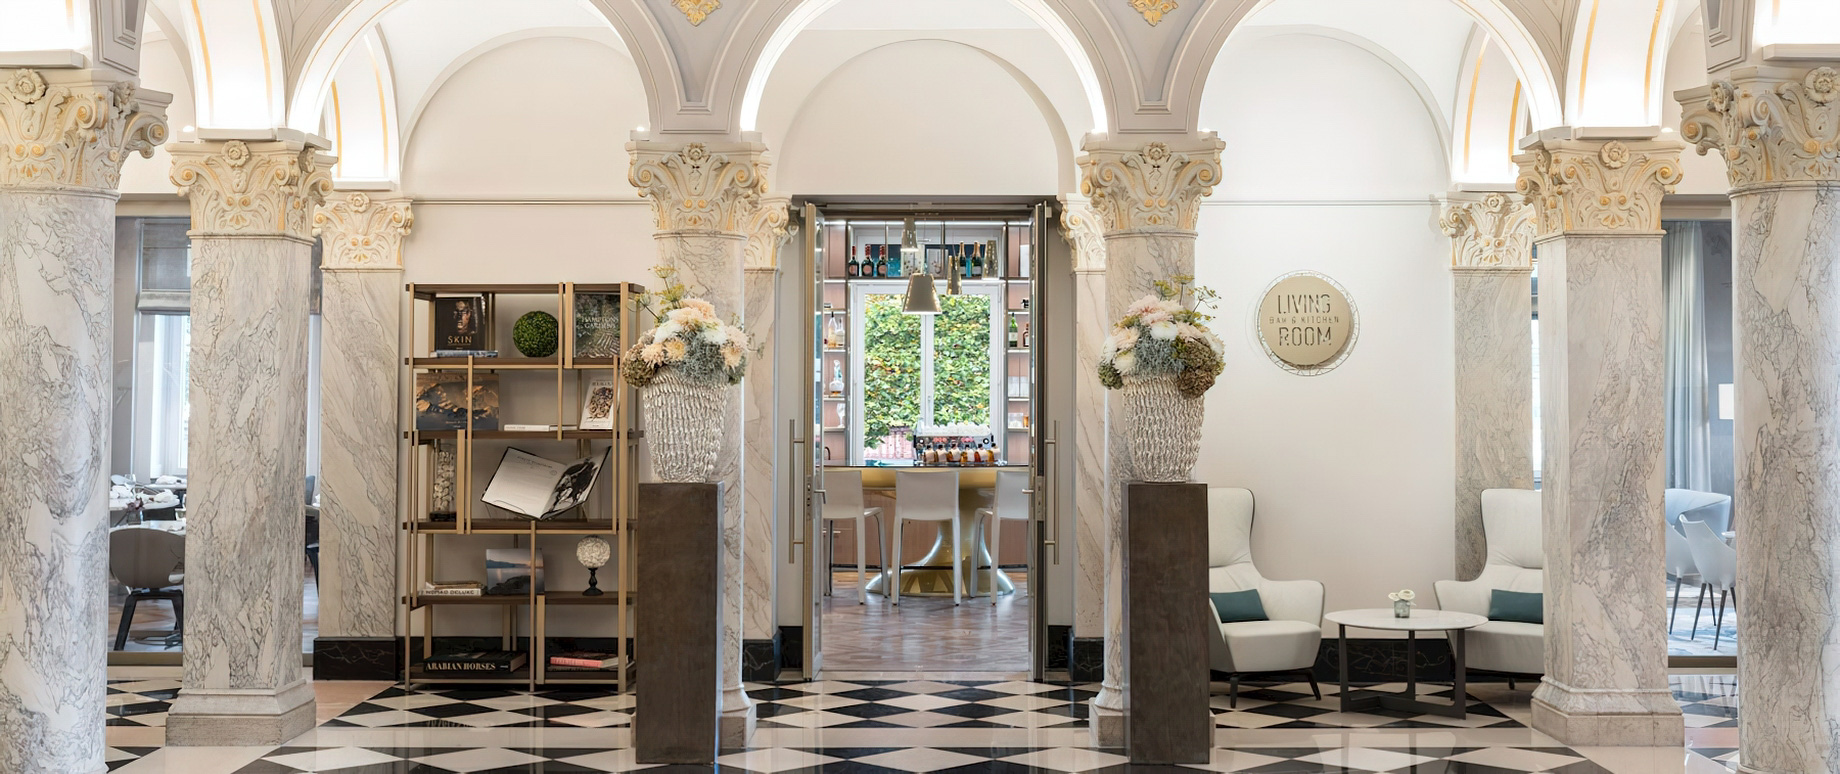 The Ritz-Carlton Hotel de la Paix, Geneva – Geneva, Switzerland – Living Room Bar & Kitchen Entrance